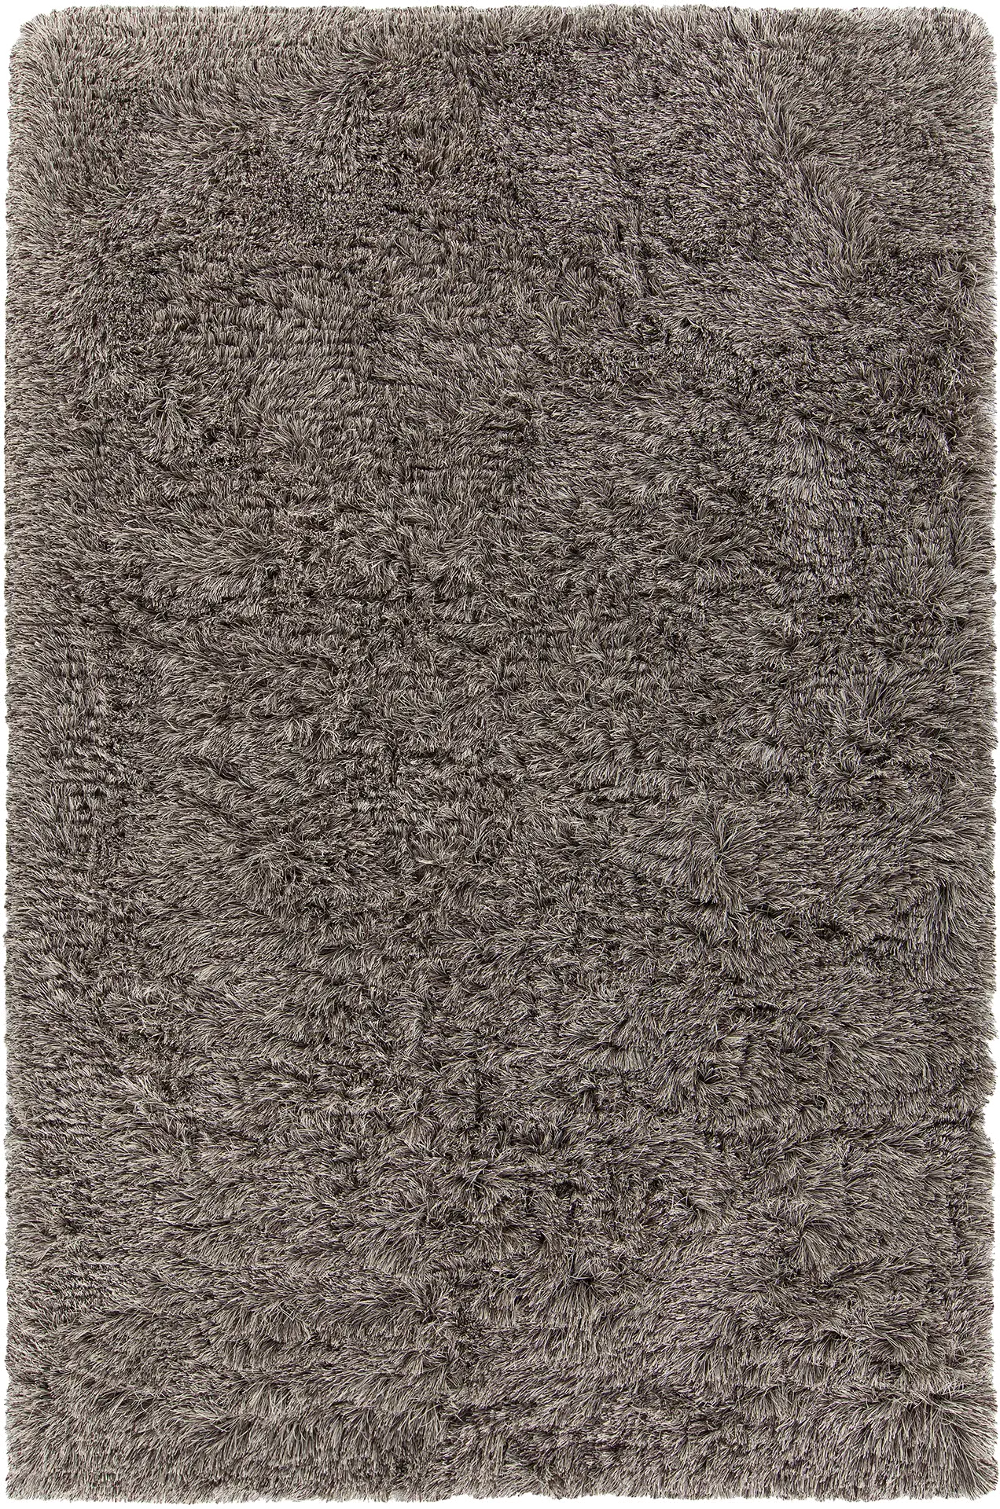 8 x 11 Large Contemporary Gray Shag Rug - Elisha-1